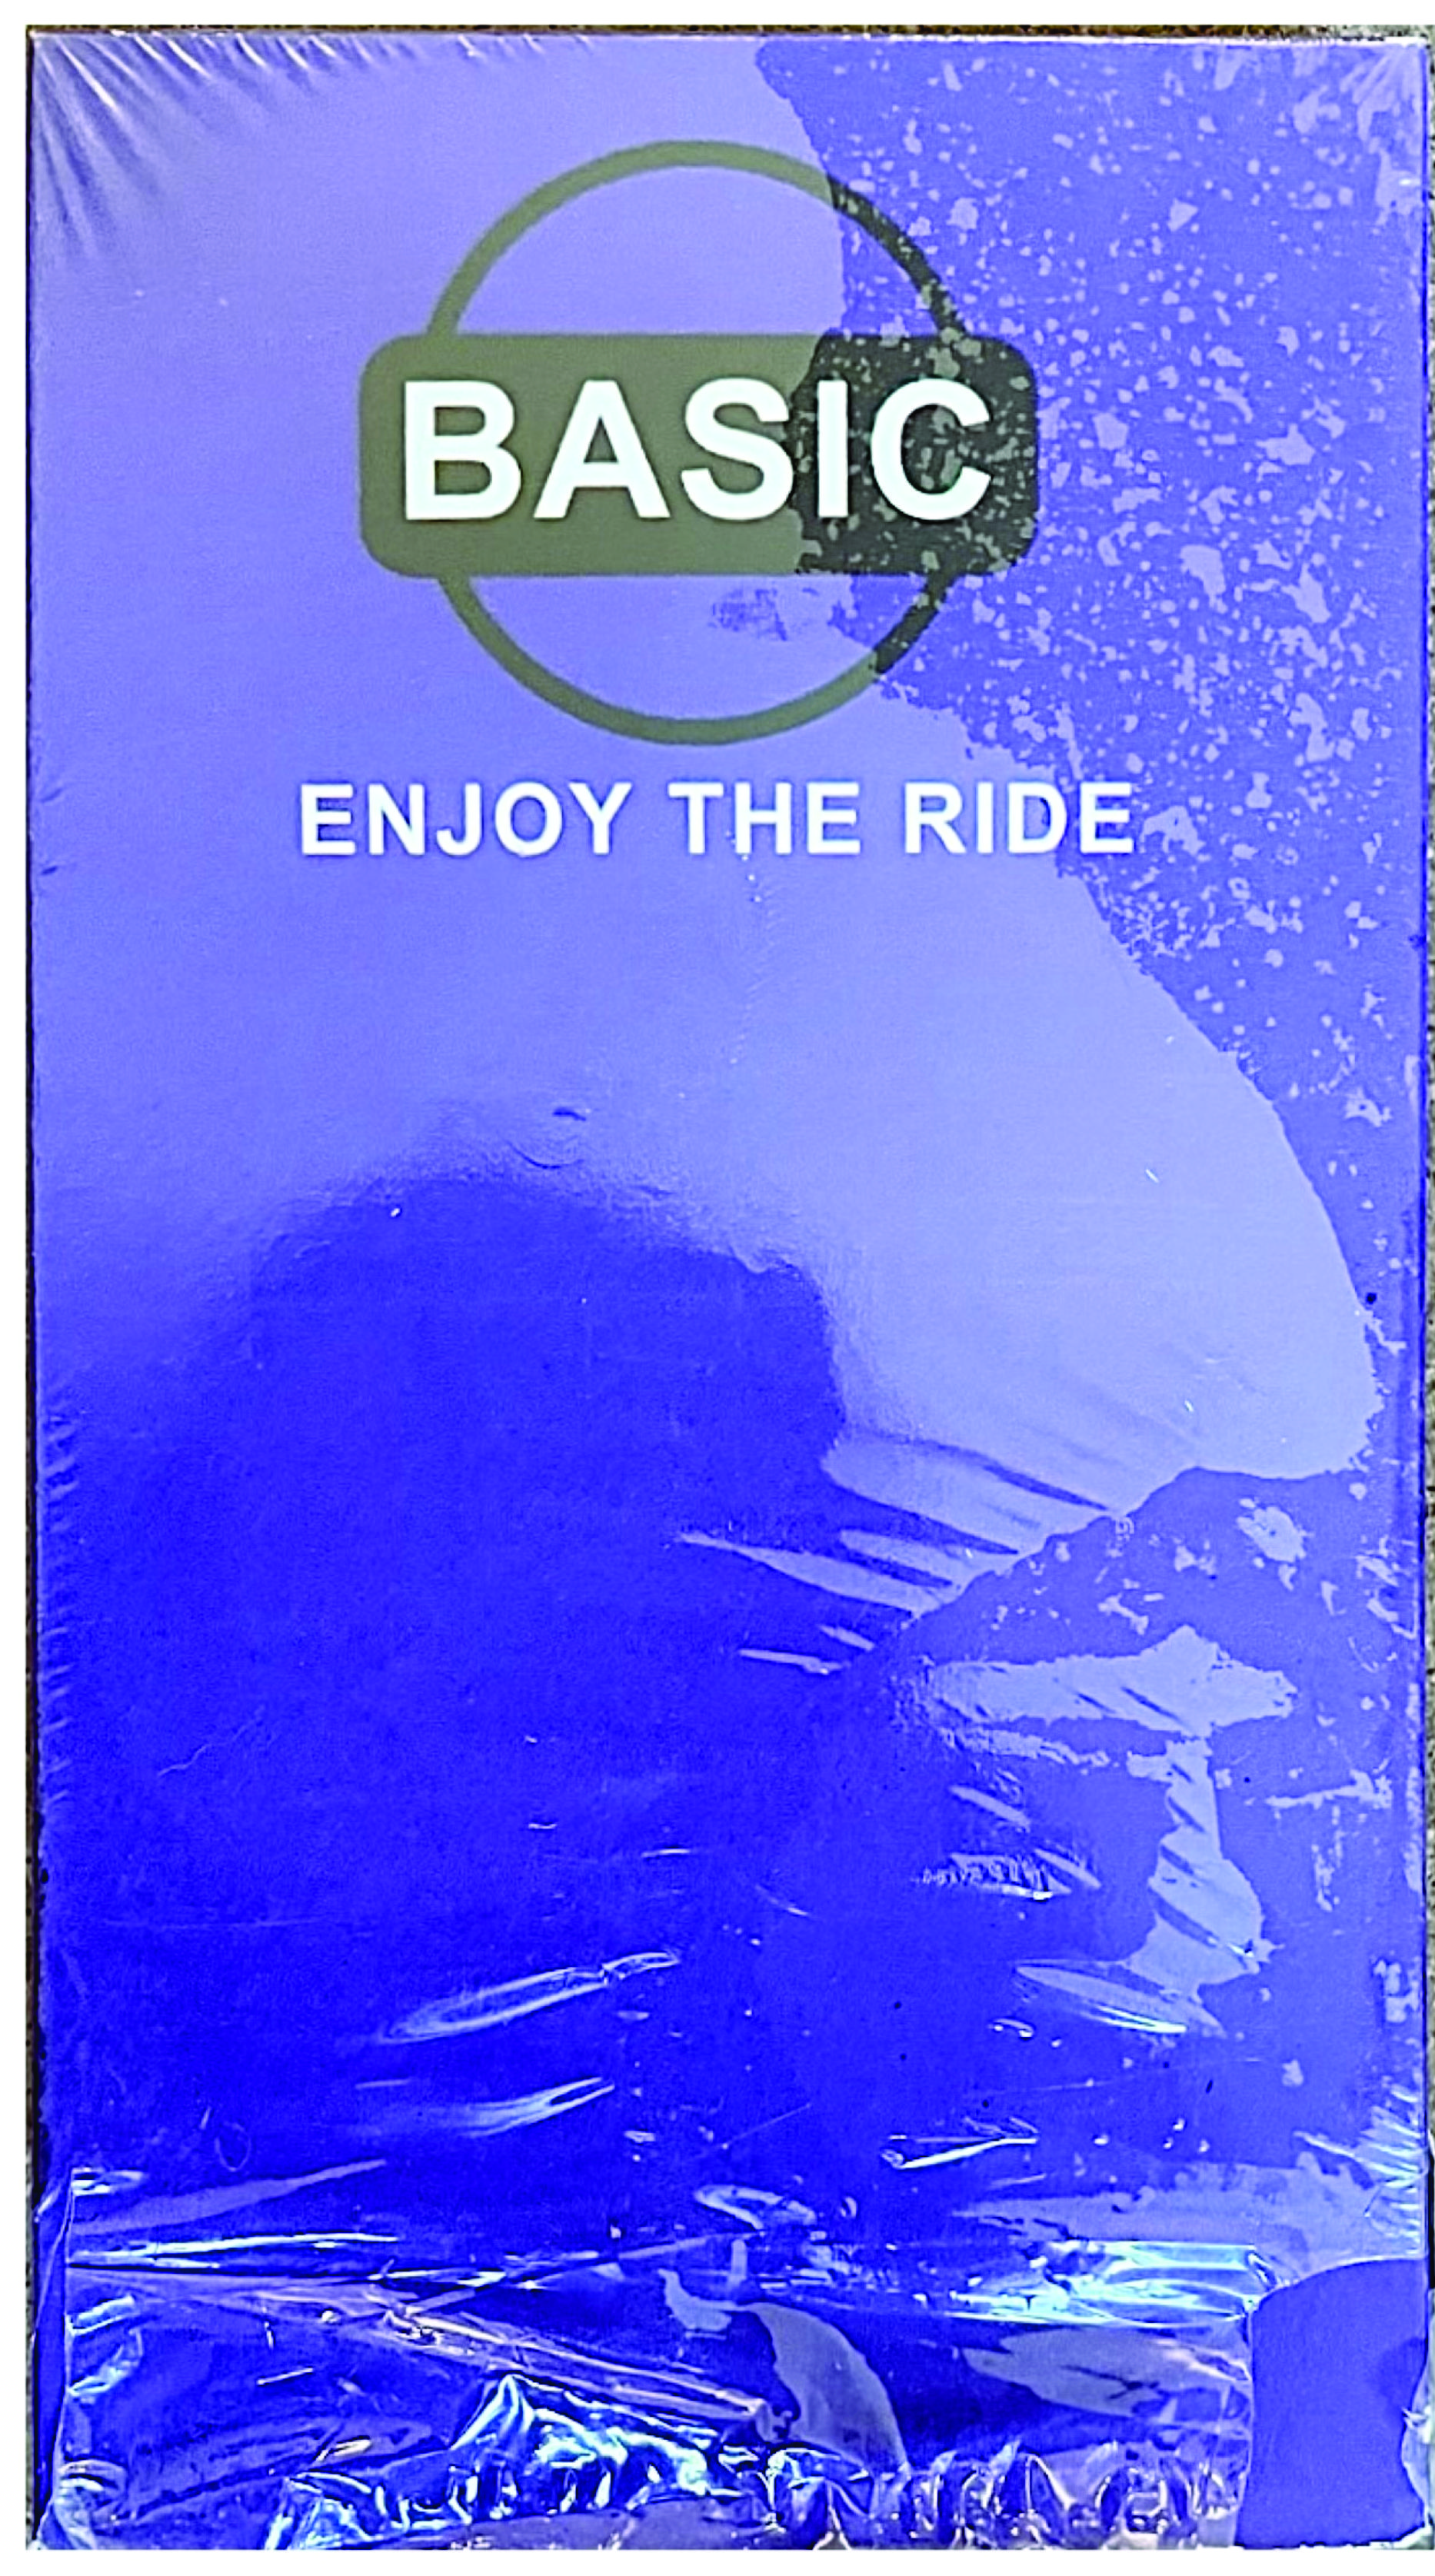 Basic - Enjoy The Ride cover